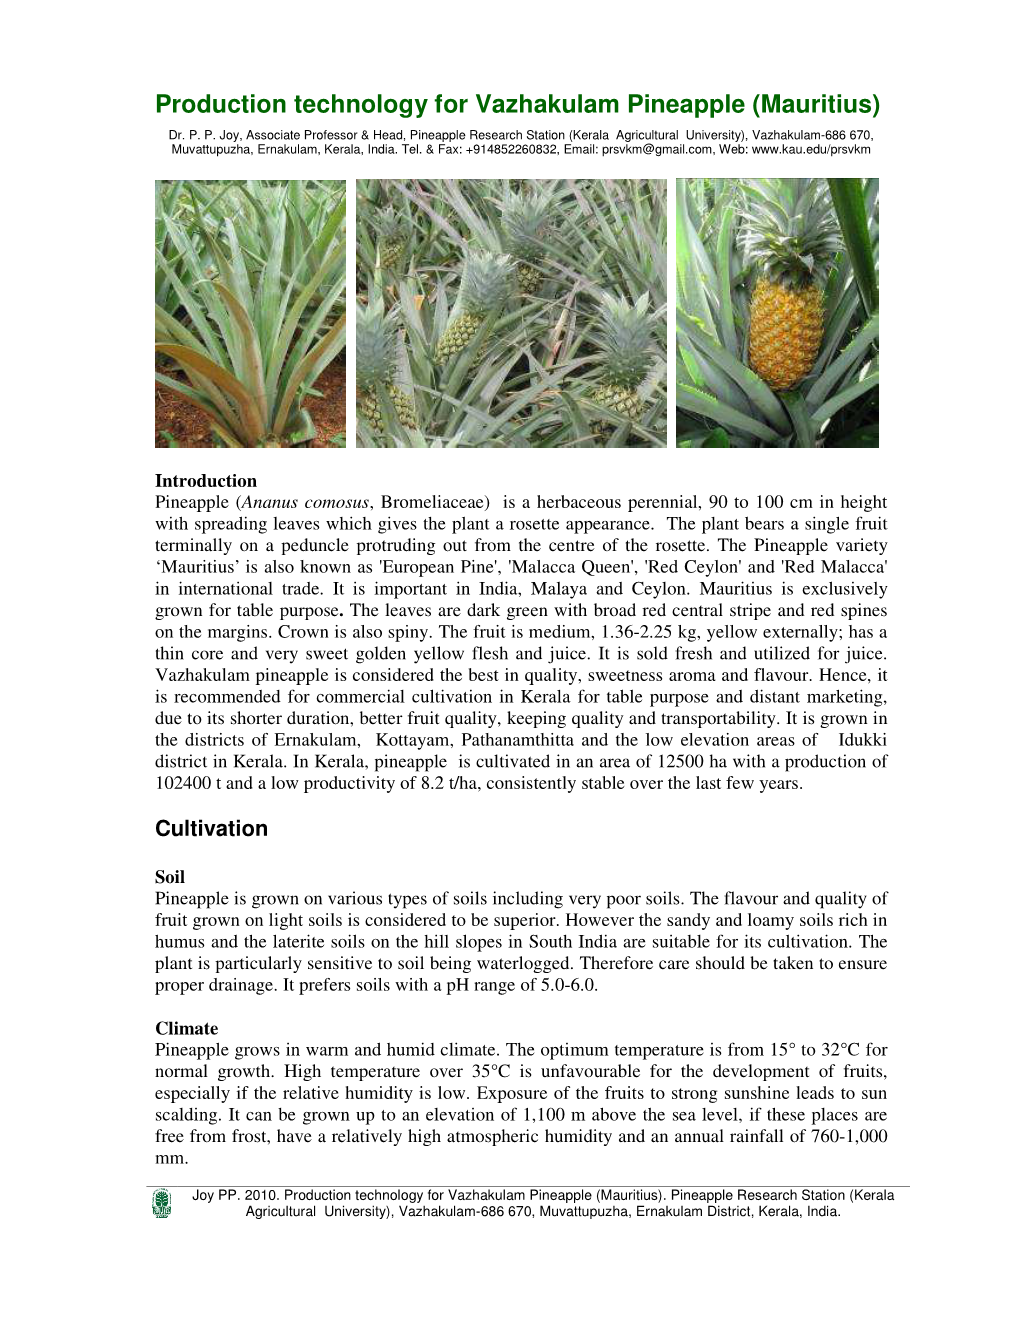 Production Technology for Vazhakulam Pineapple Mauritius